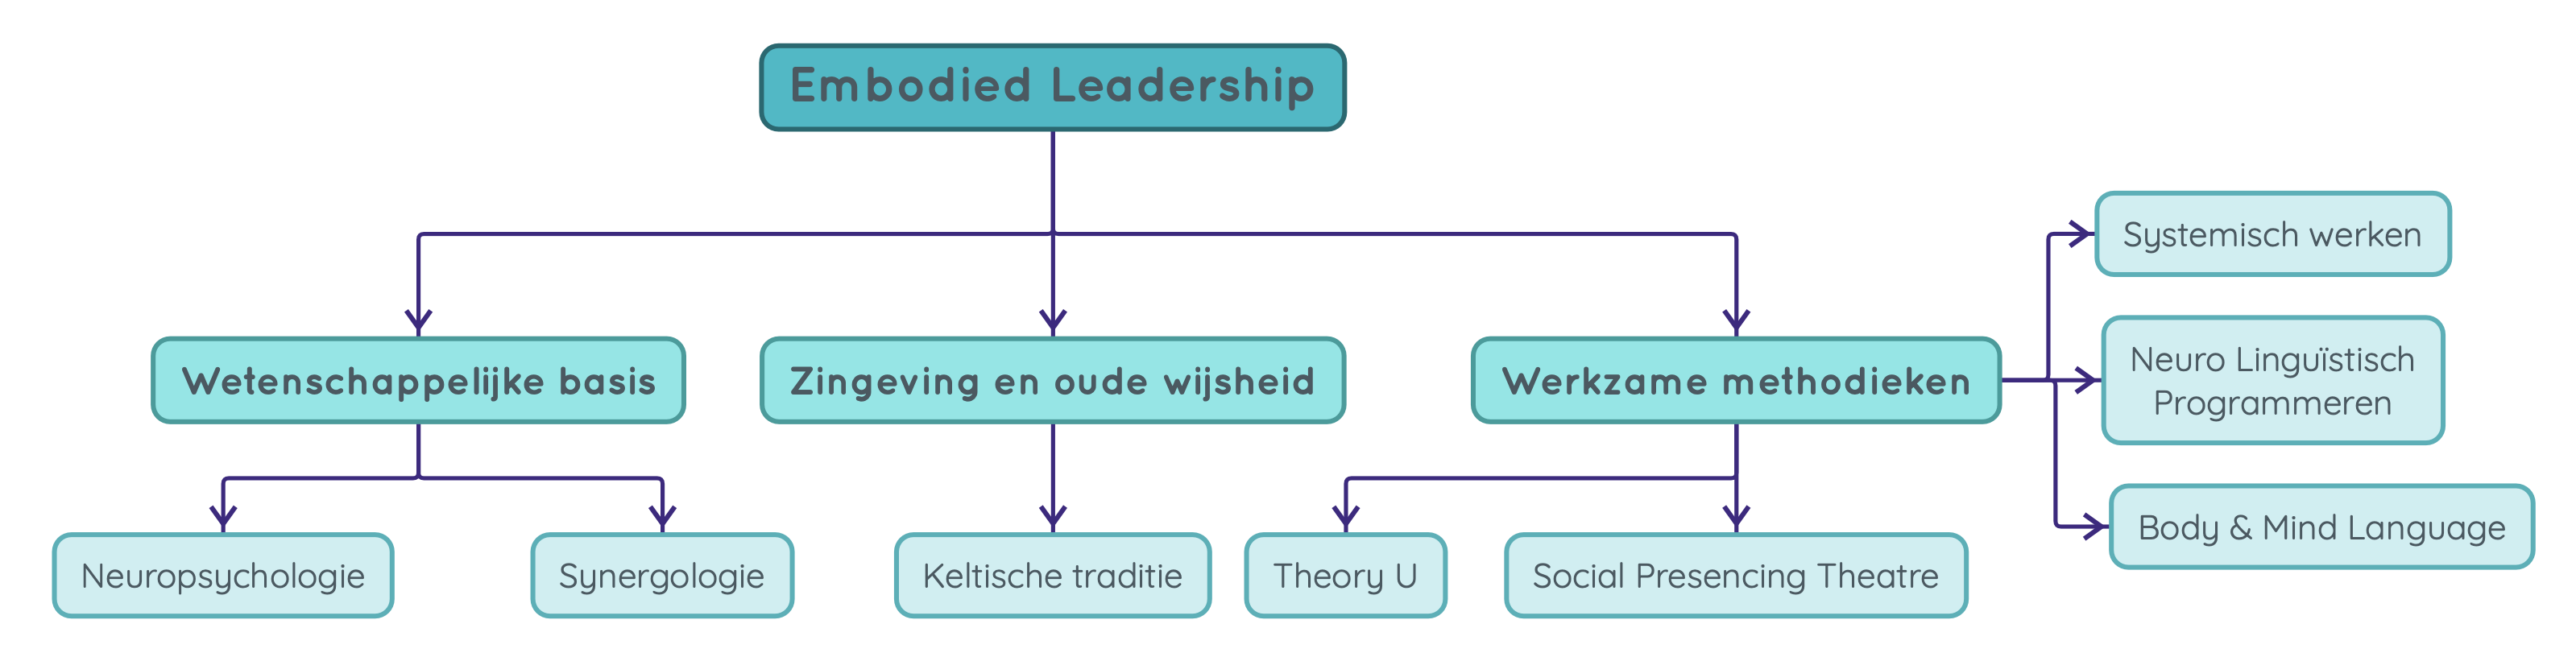 Werkveld Embodied Leadership